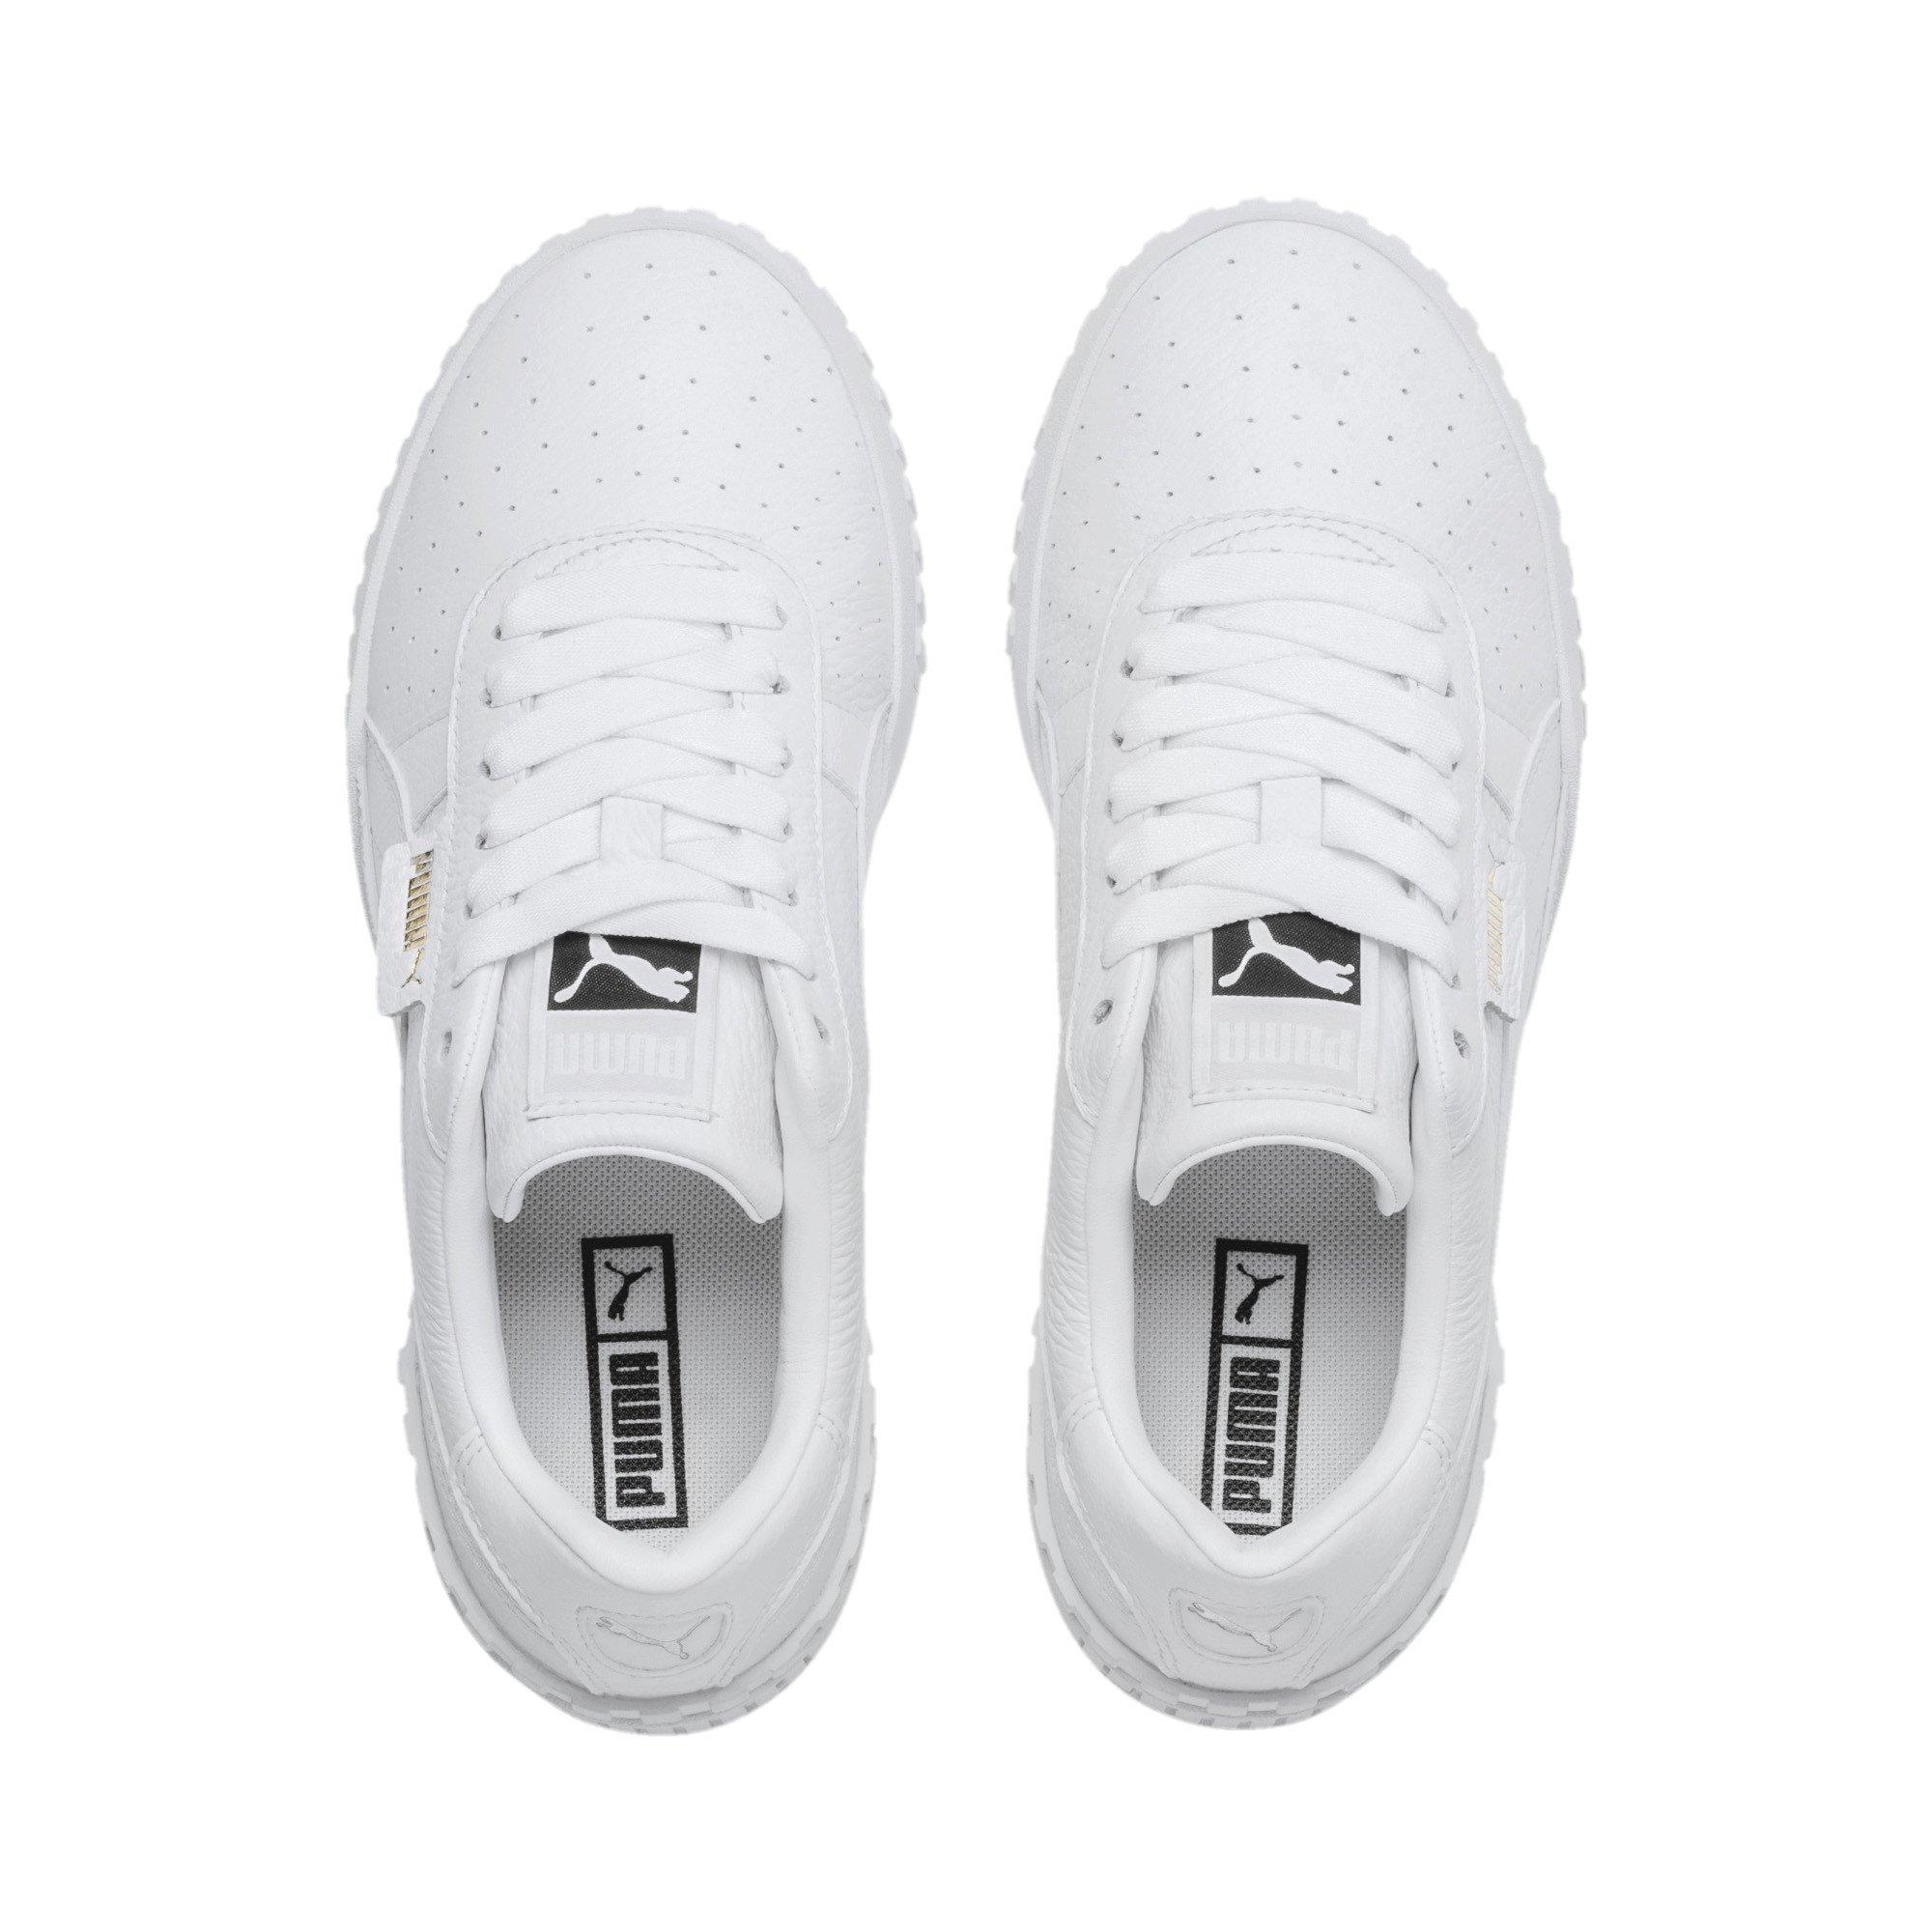 womens white puma tennis shoes